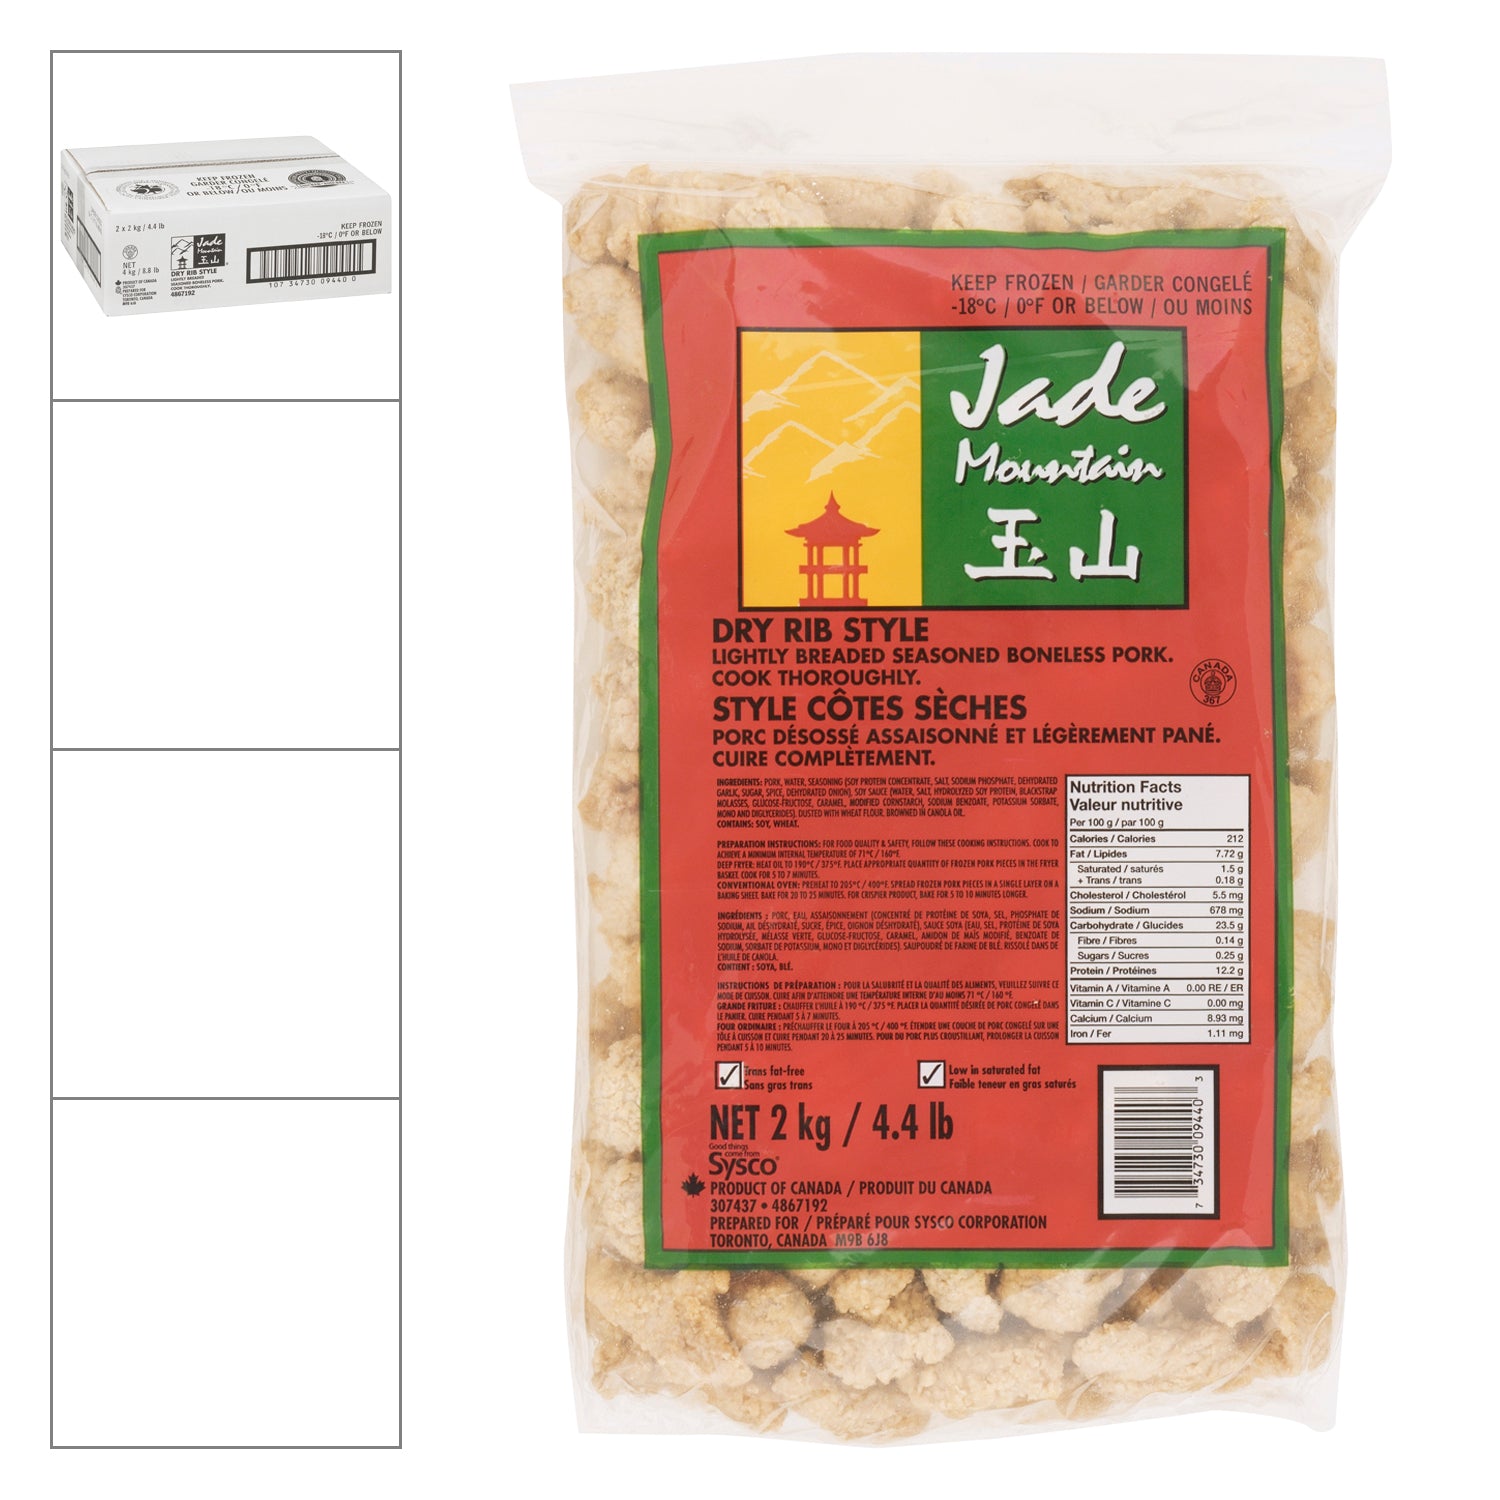 Jade Mountain Classic Boneless Dry Pork Ribs 4kg [$16.24/kg] [$7.37/lb]